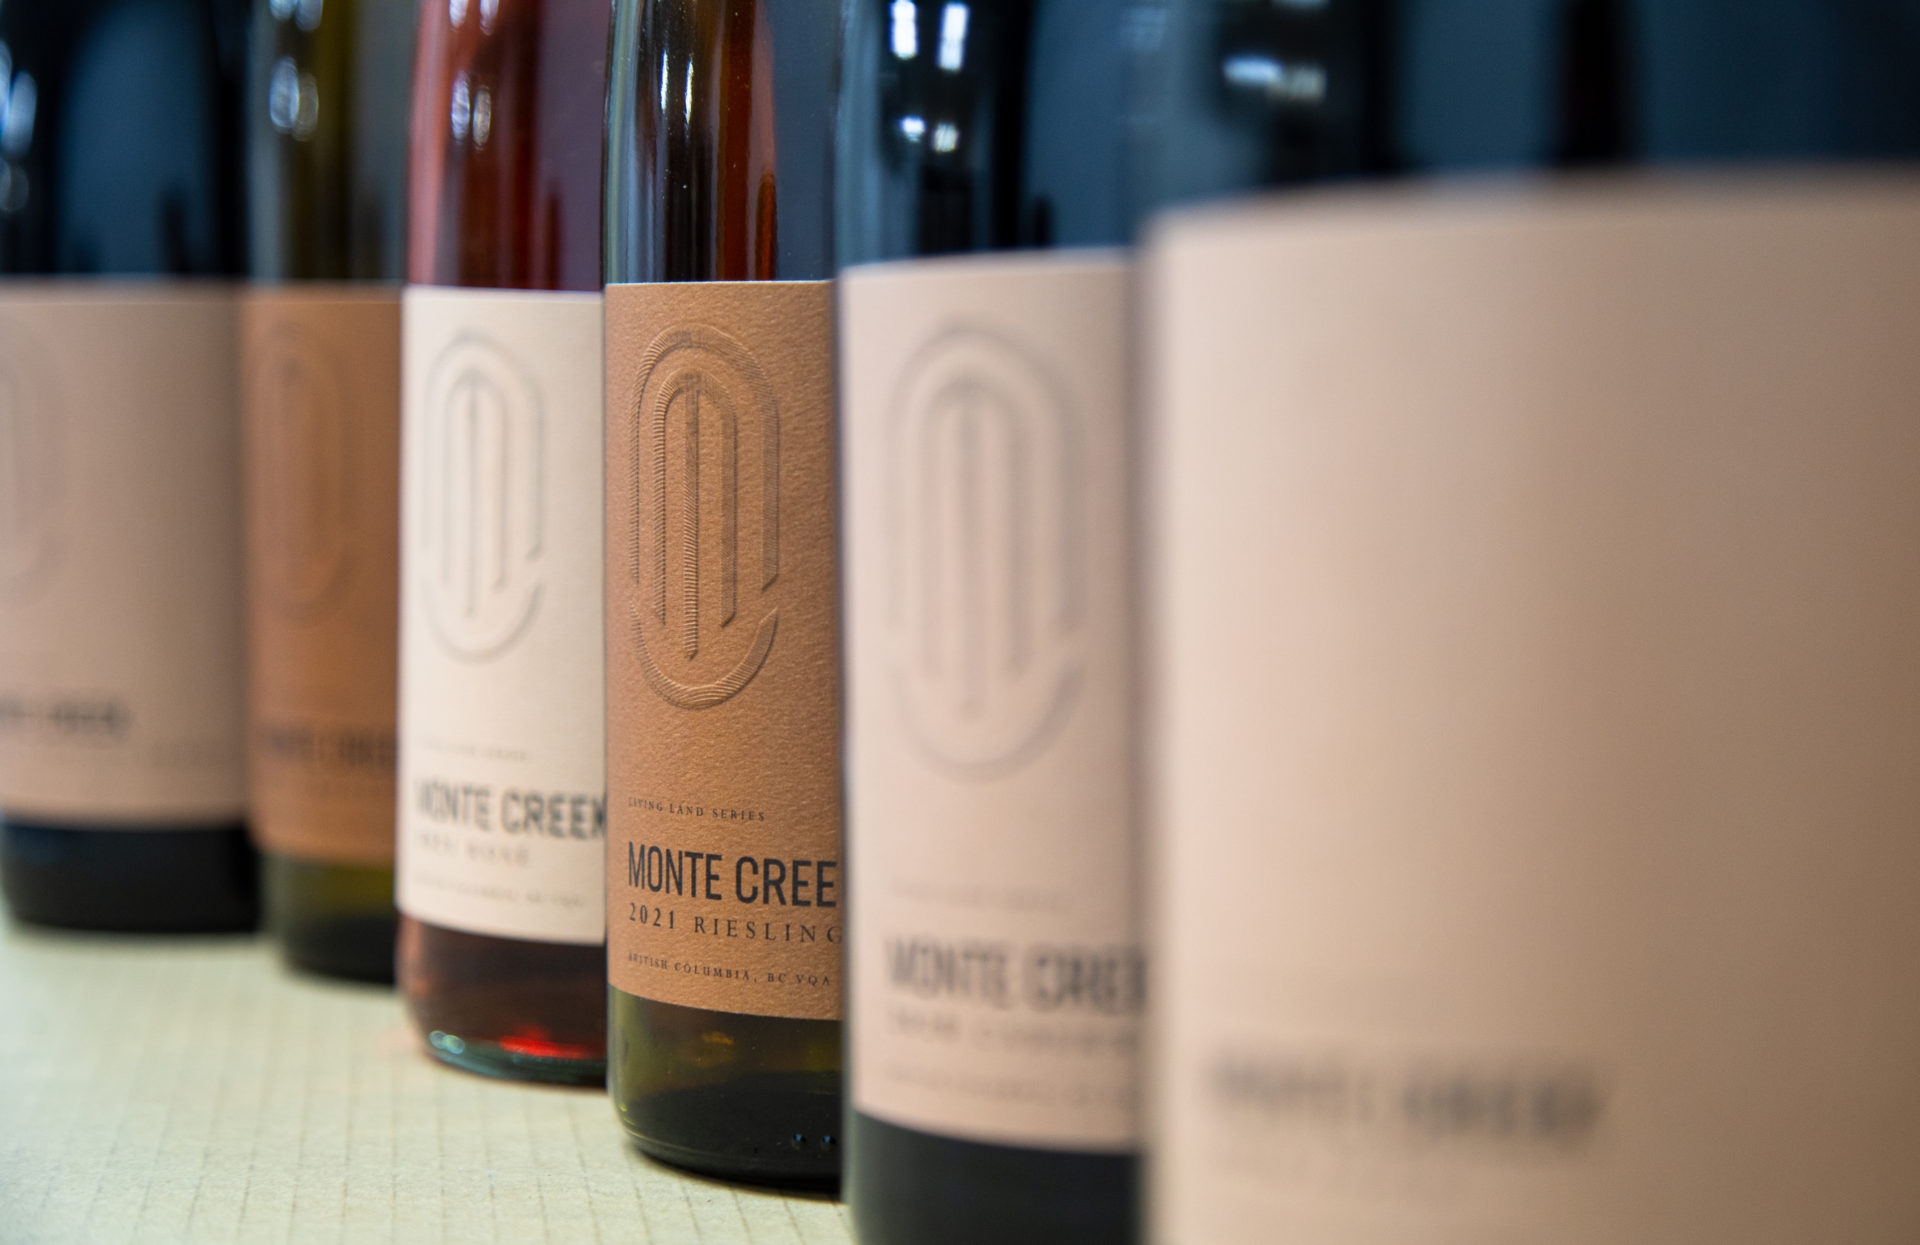 monte creek wine line up